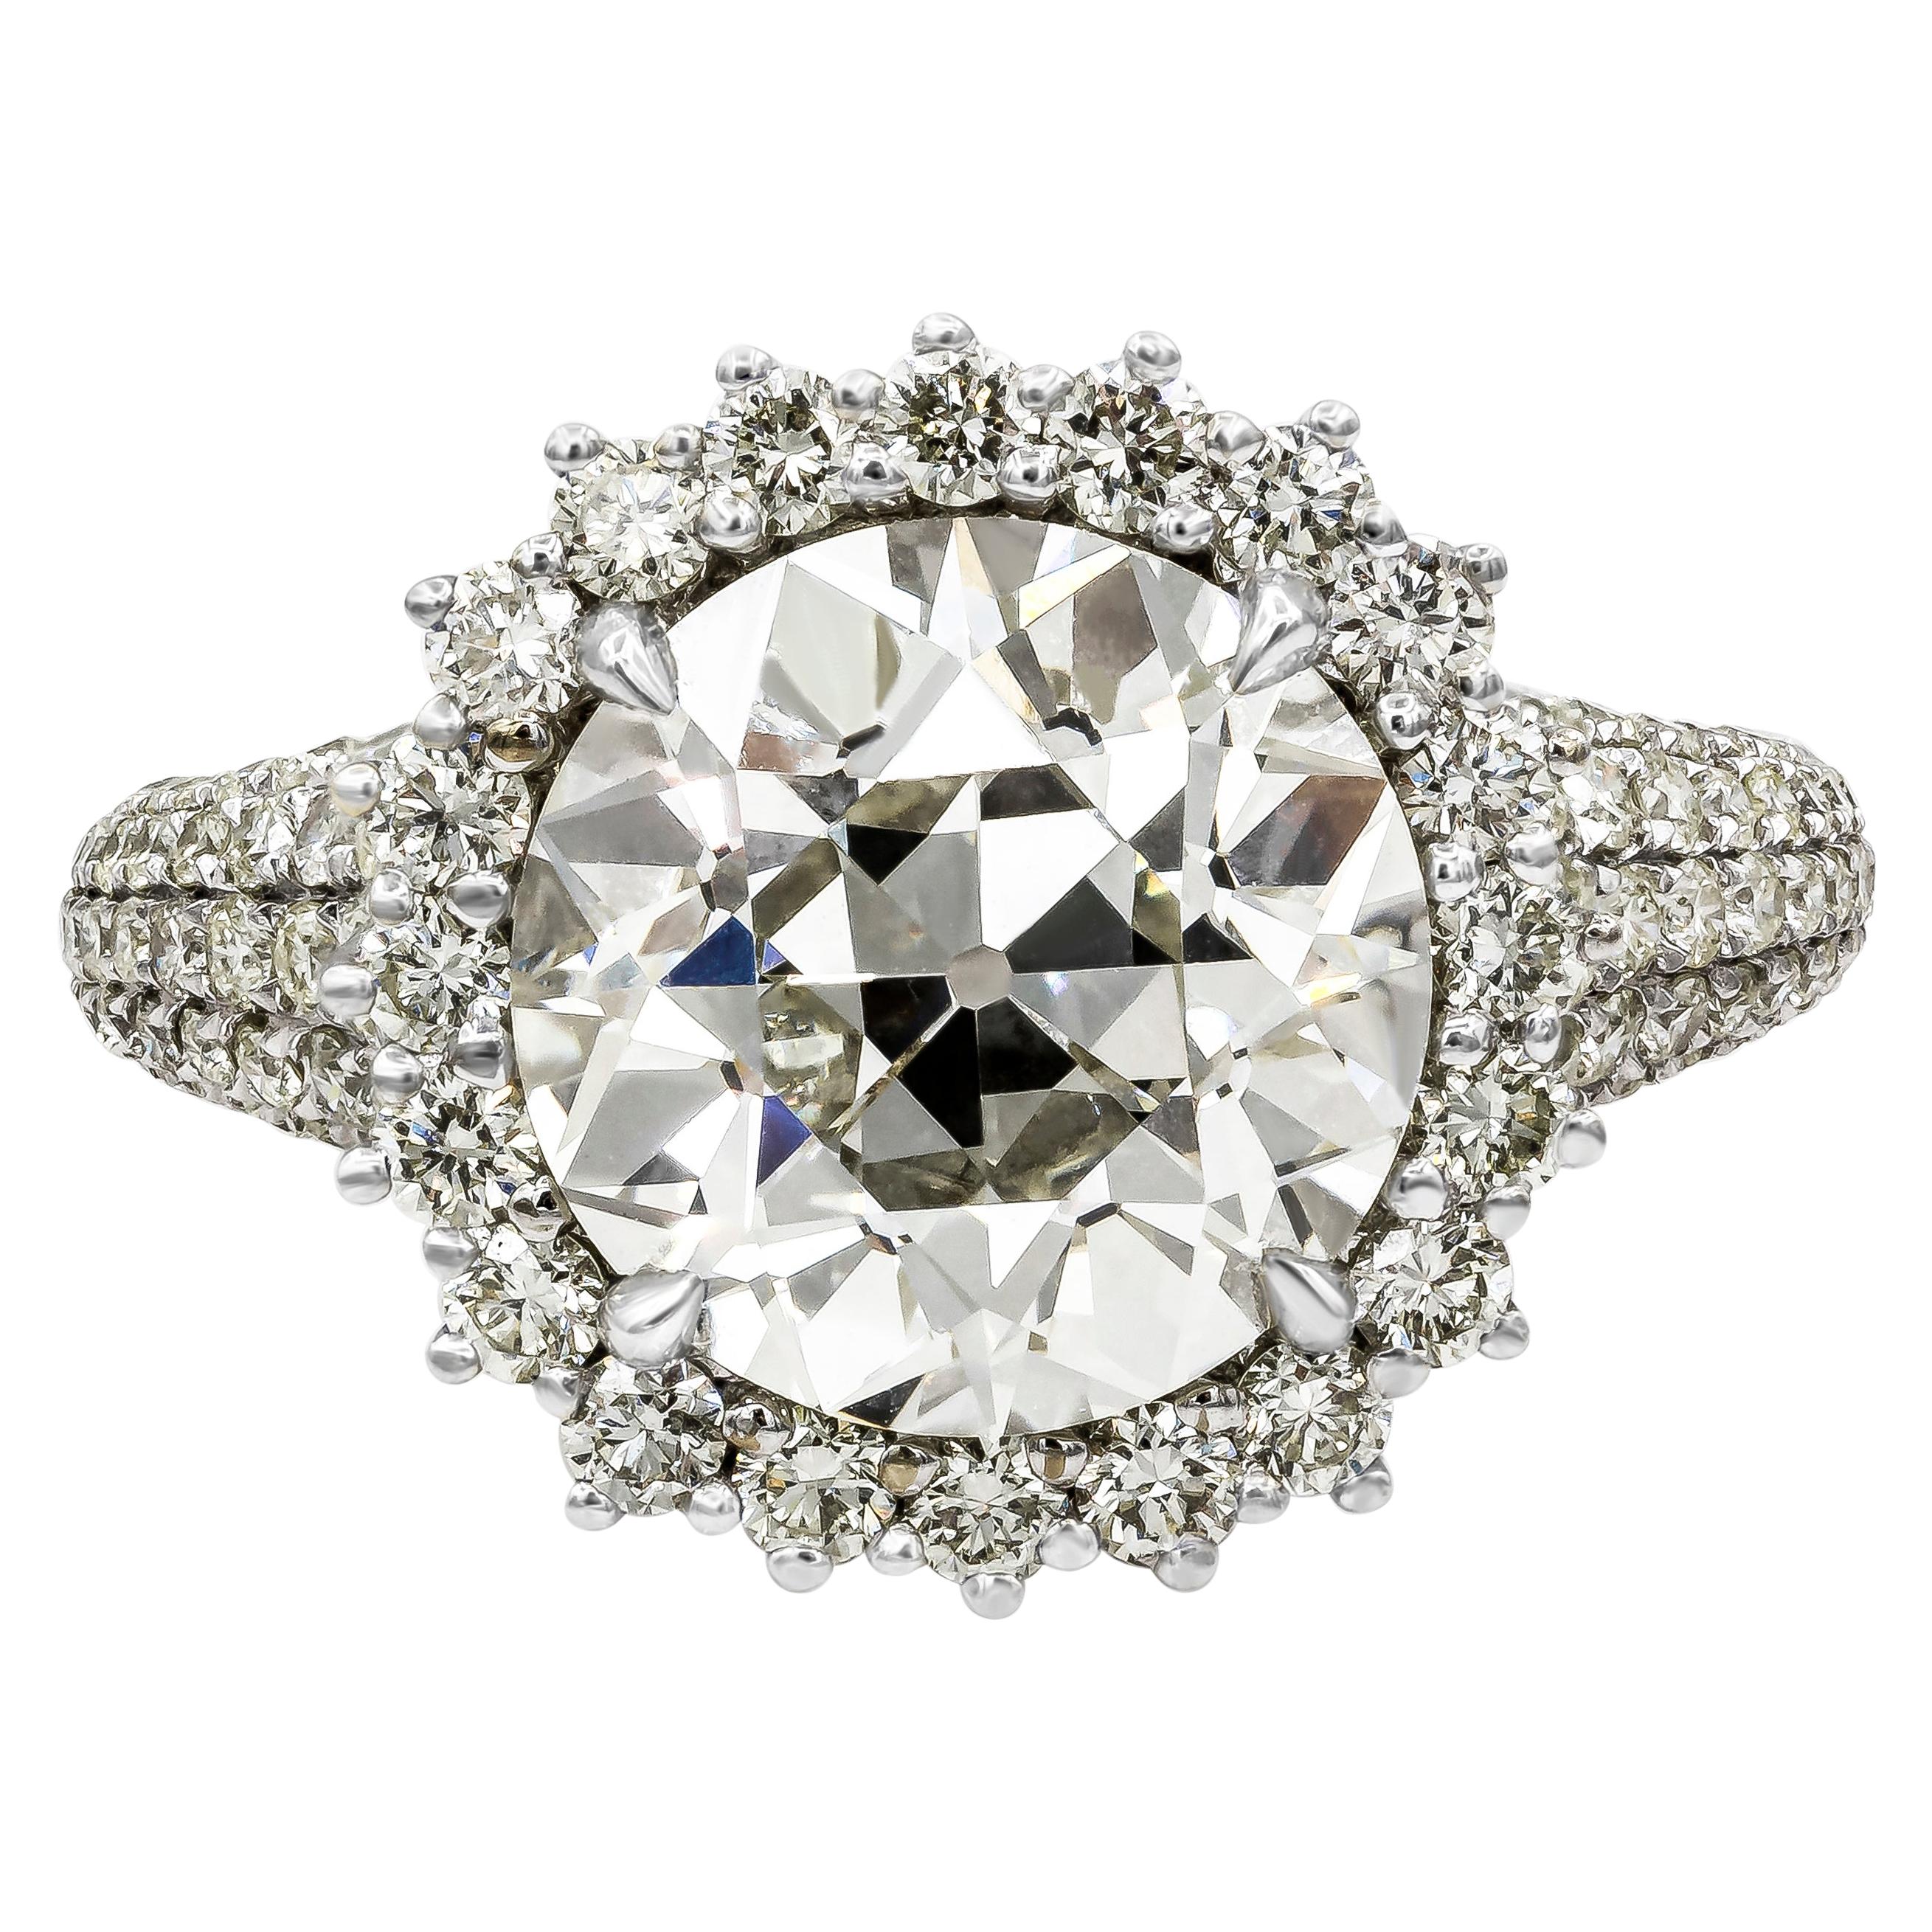 Roman Malakov GIA Certified 5.56 Carats Old European Cut Diamond Engagement Ring